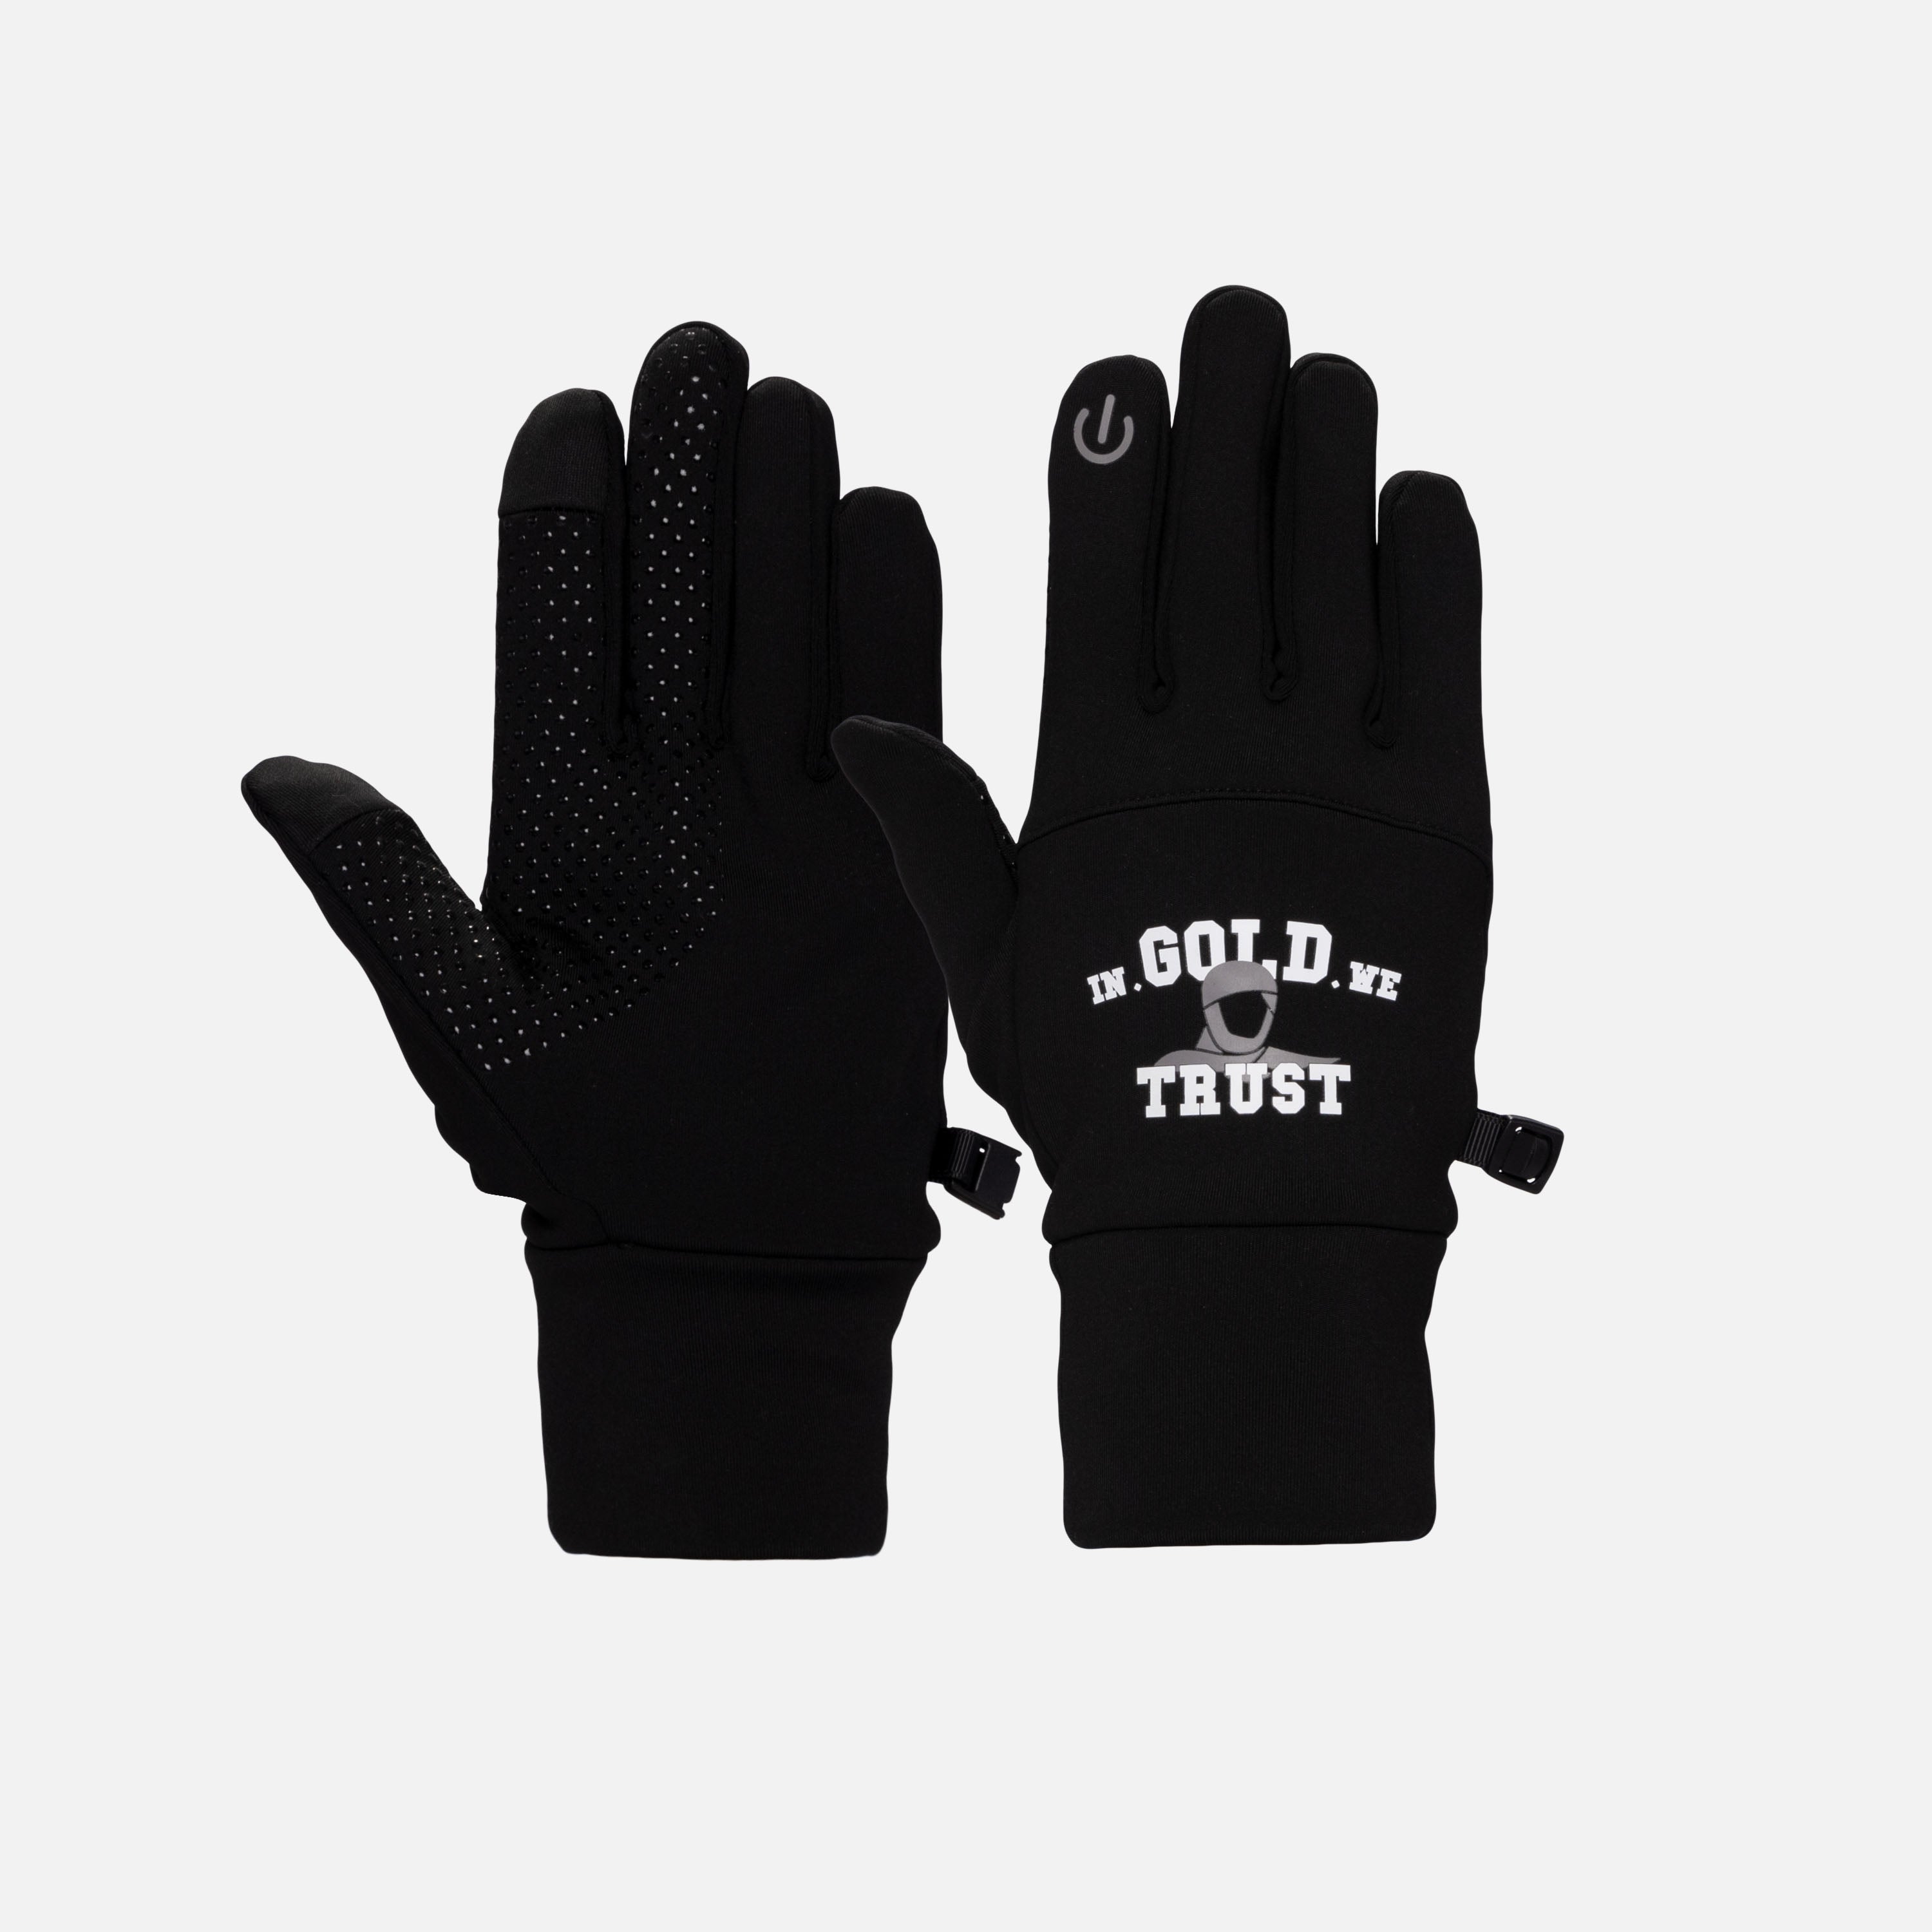 The Glove x Nomad Black